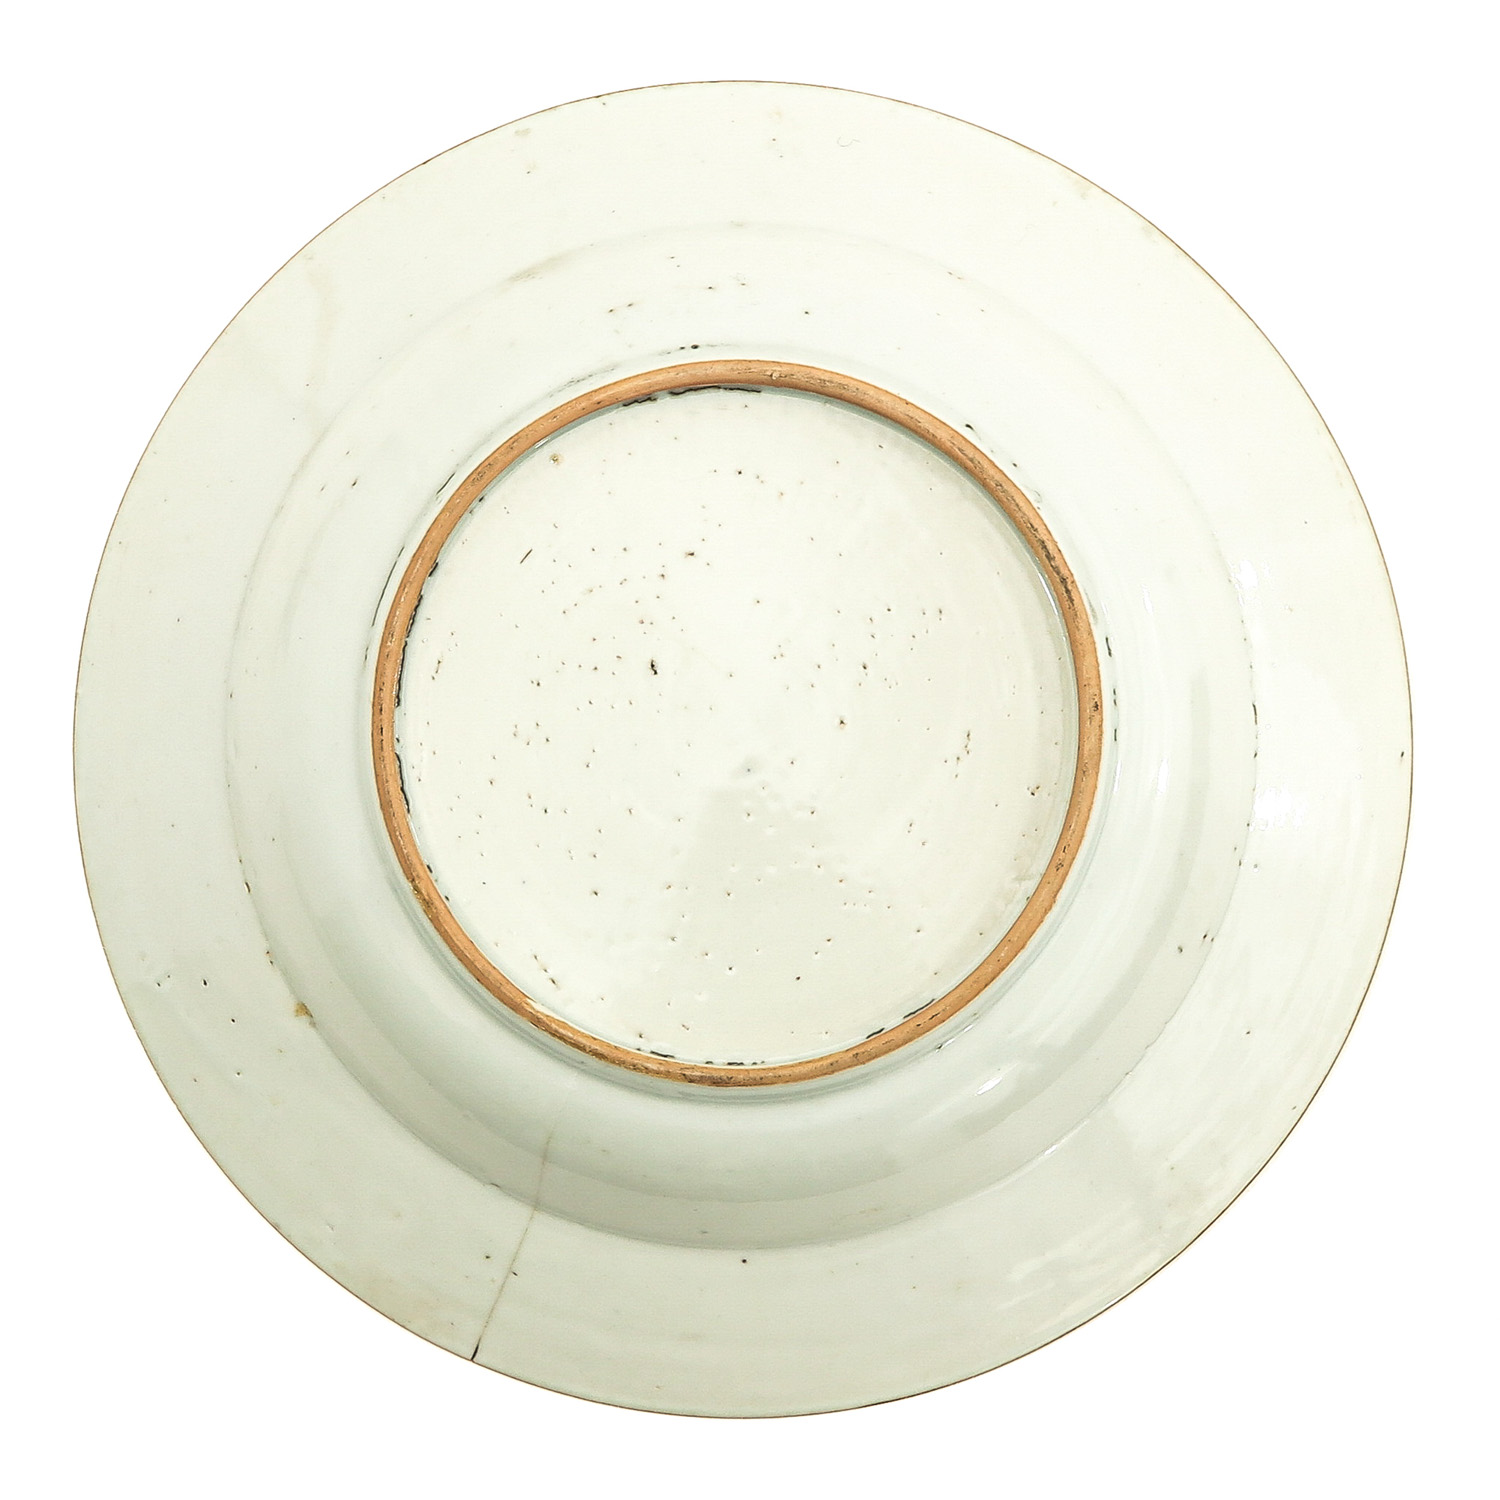 A Series of 3 Imari Plates - Image 6 of 10